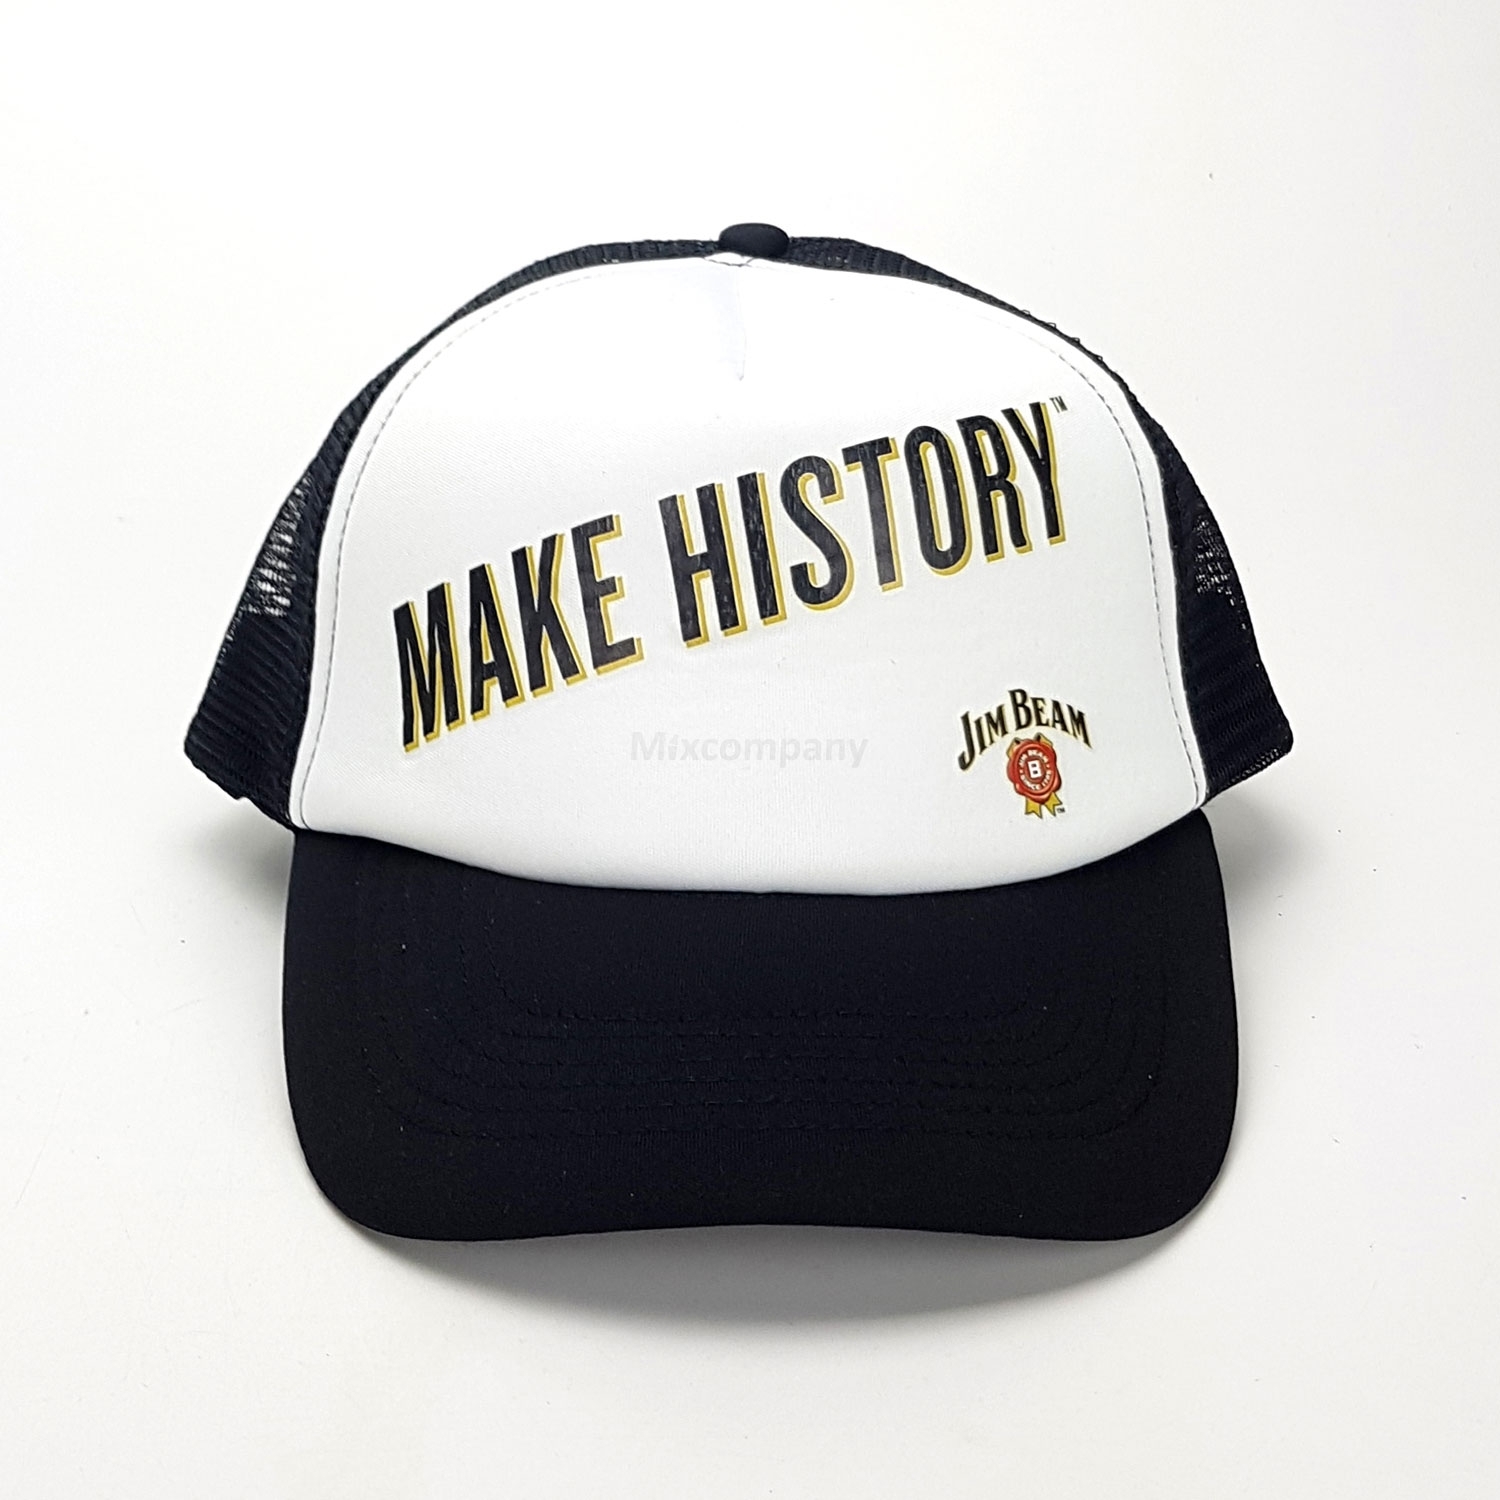 Jim Beam Make History Kappe Basecap Cap Mütze 100% Polyester